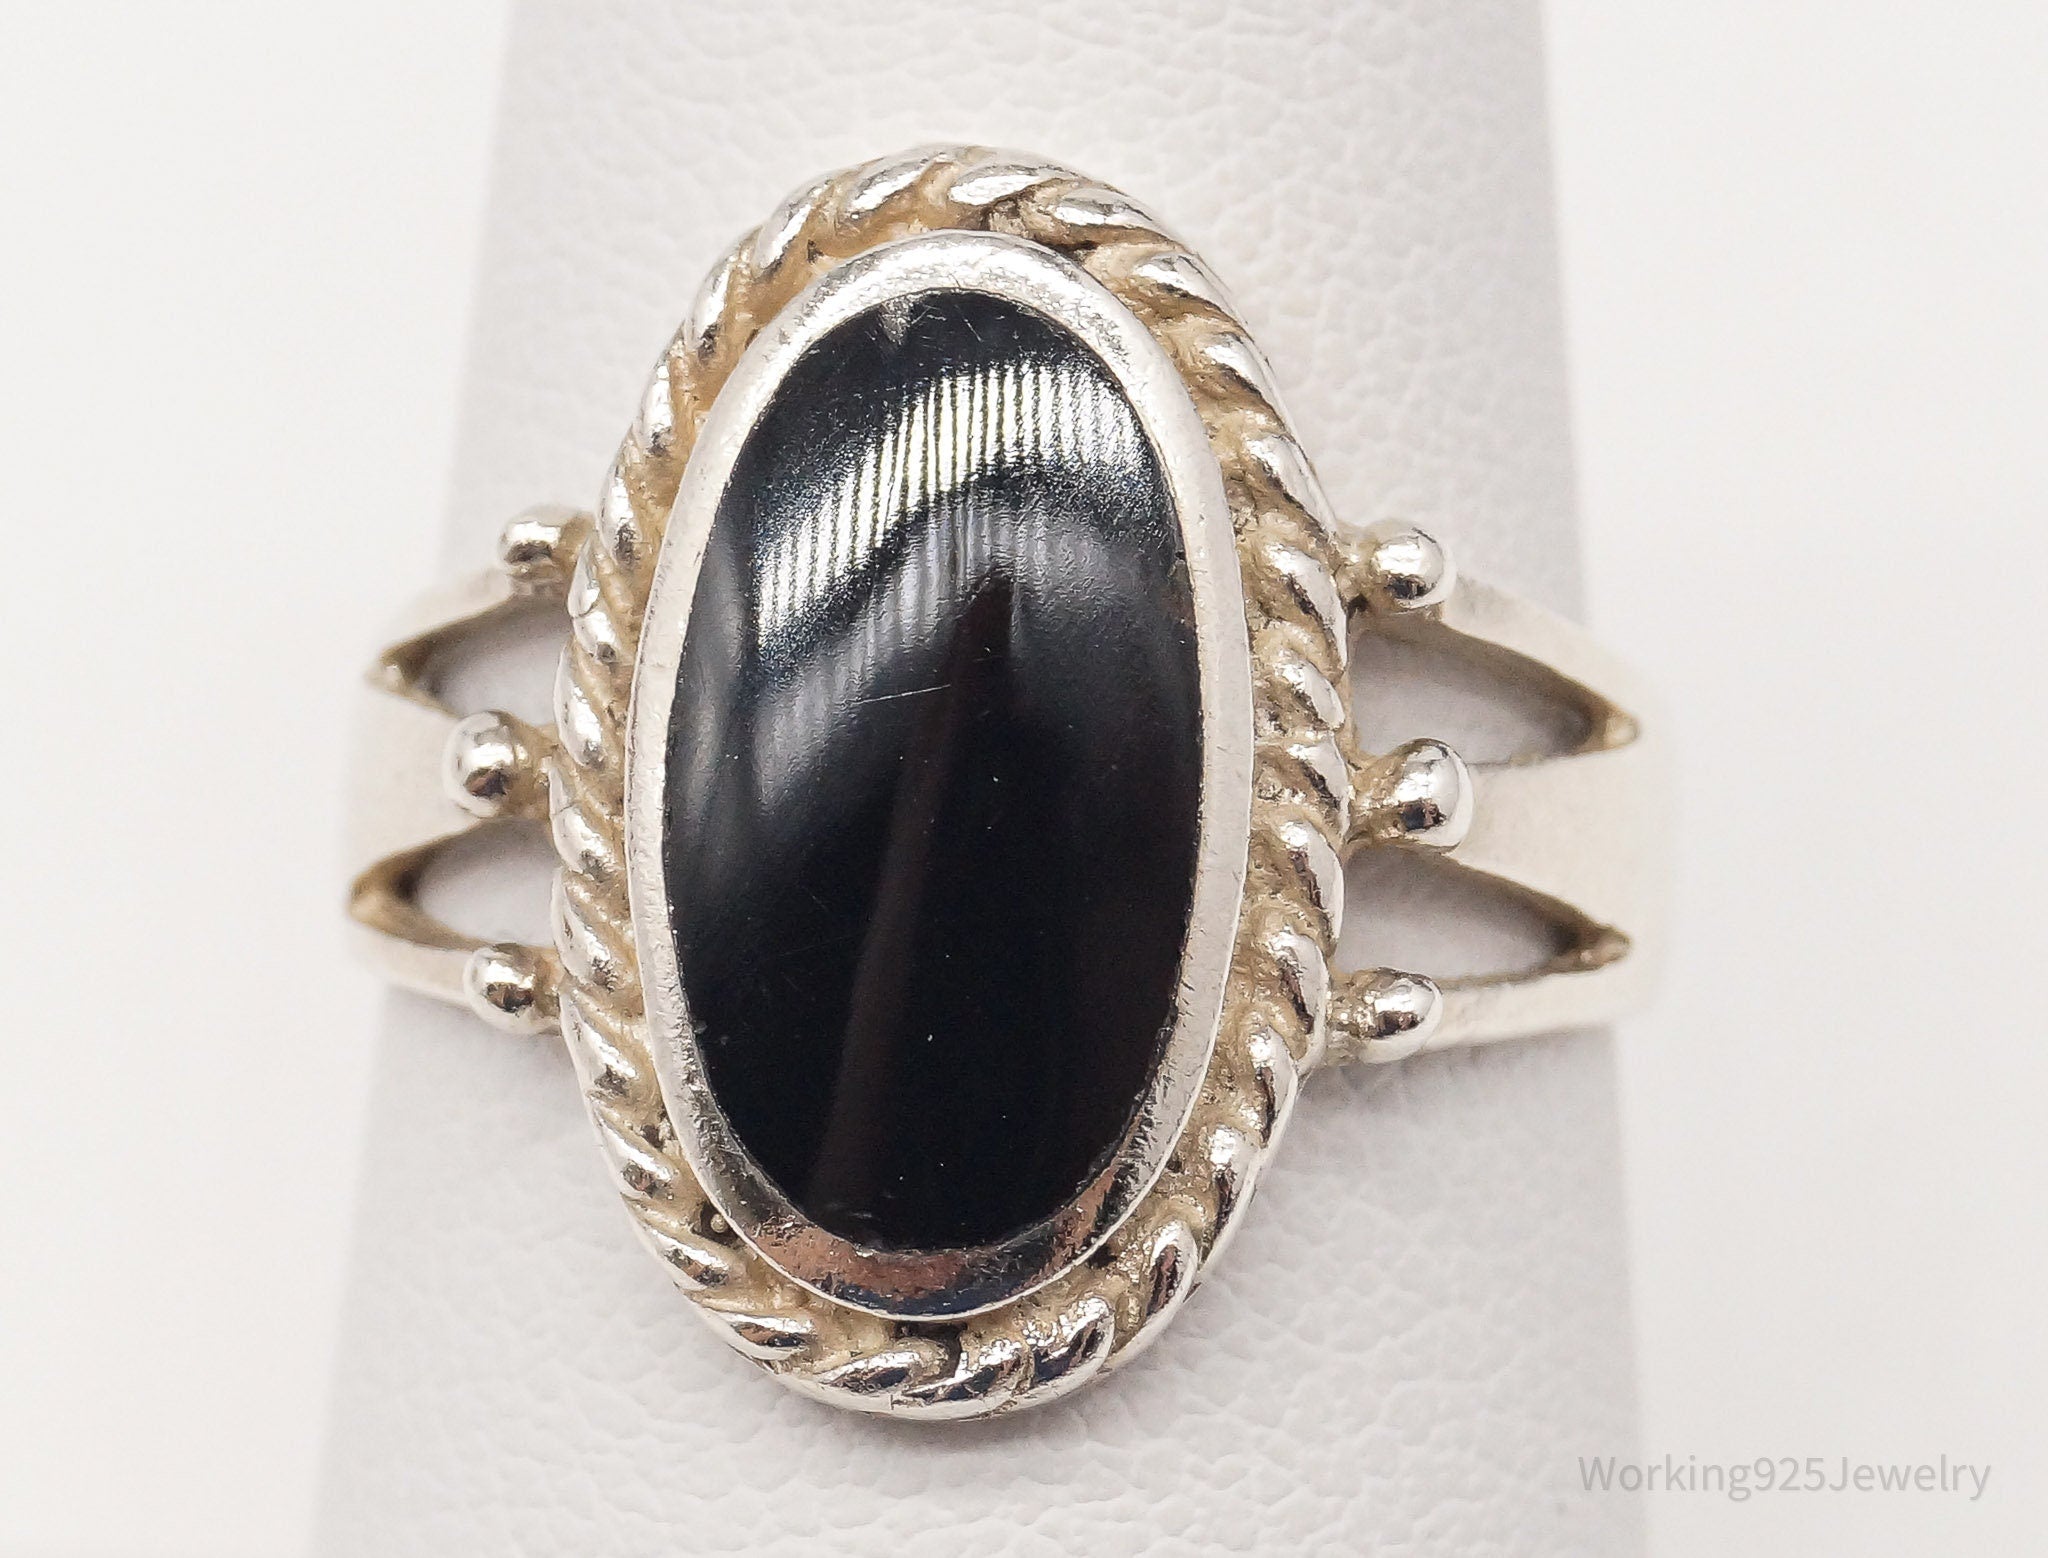 Vintage Southwestern Style Black Onyx Sterling Silver Ring Size 6.75